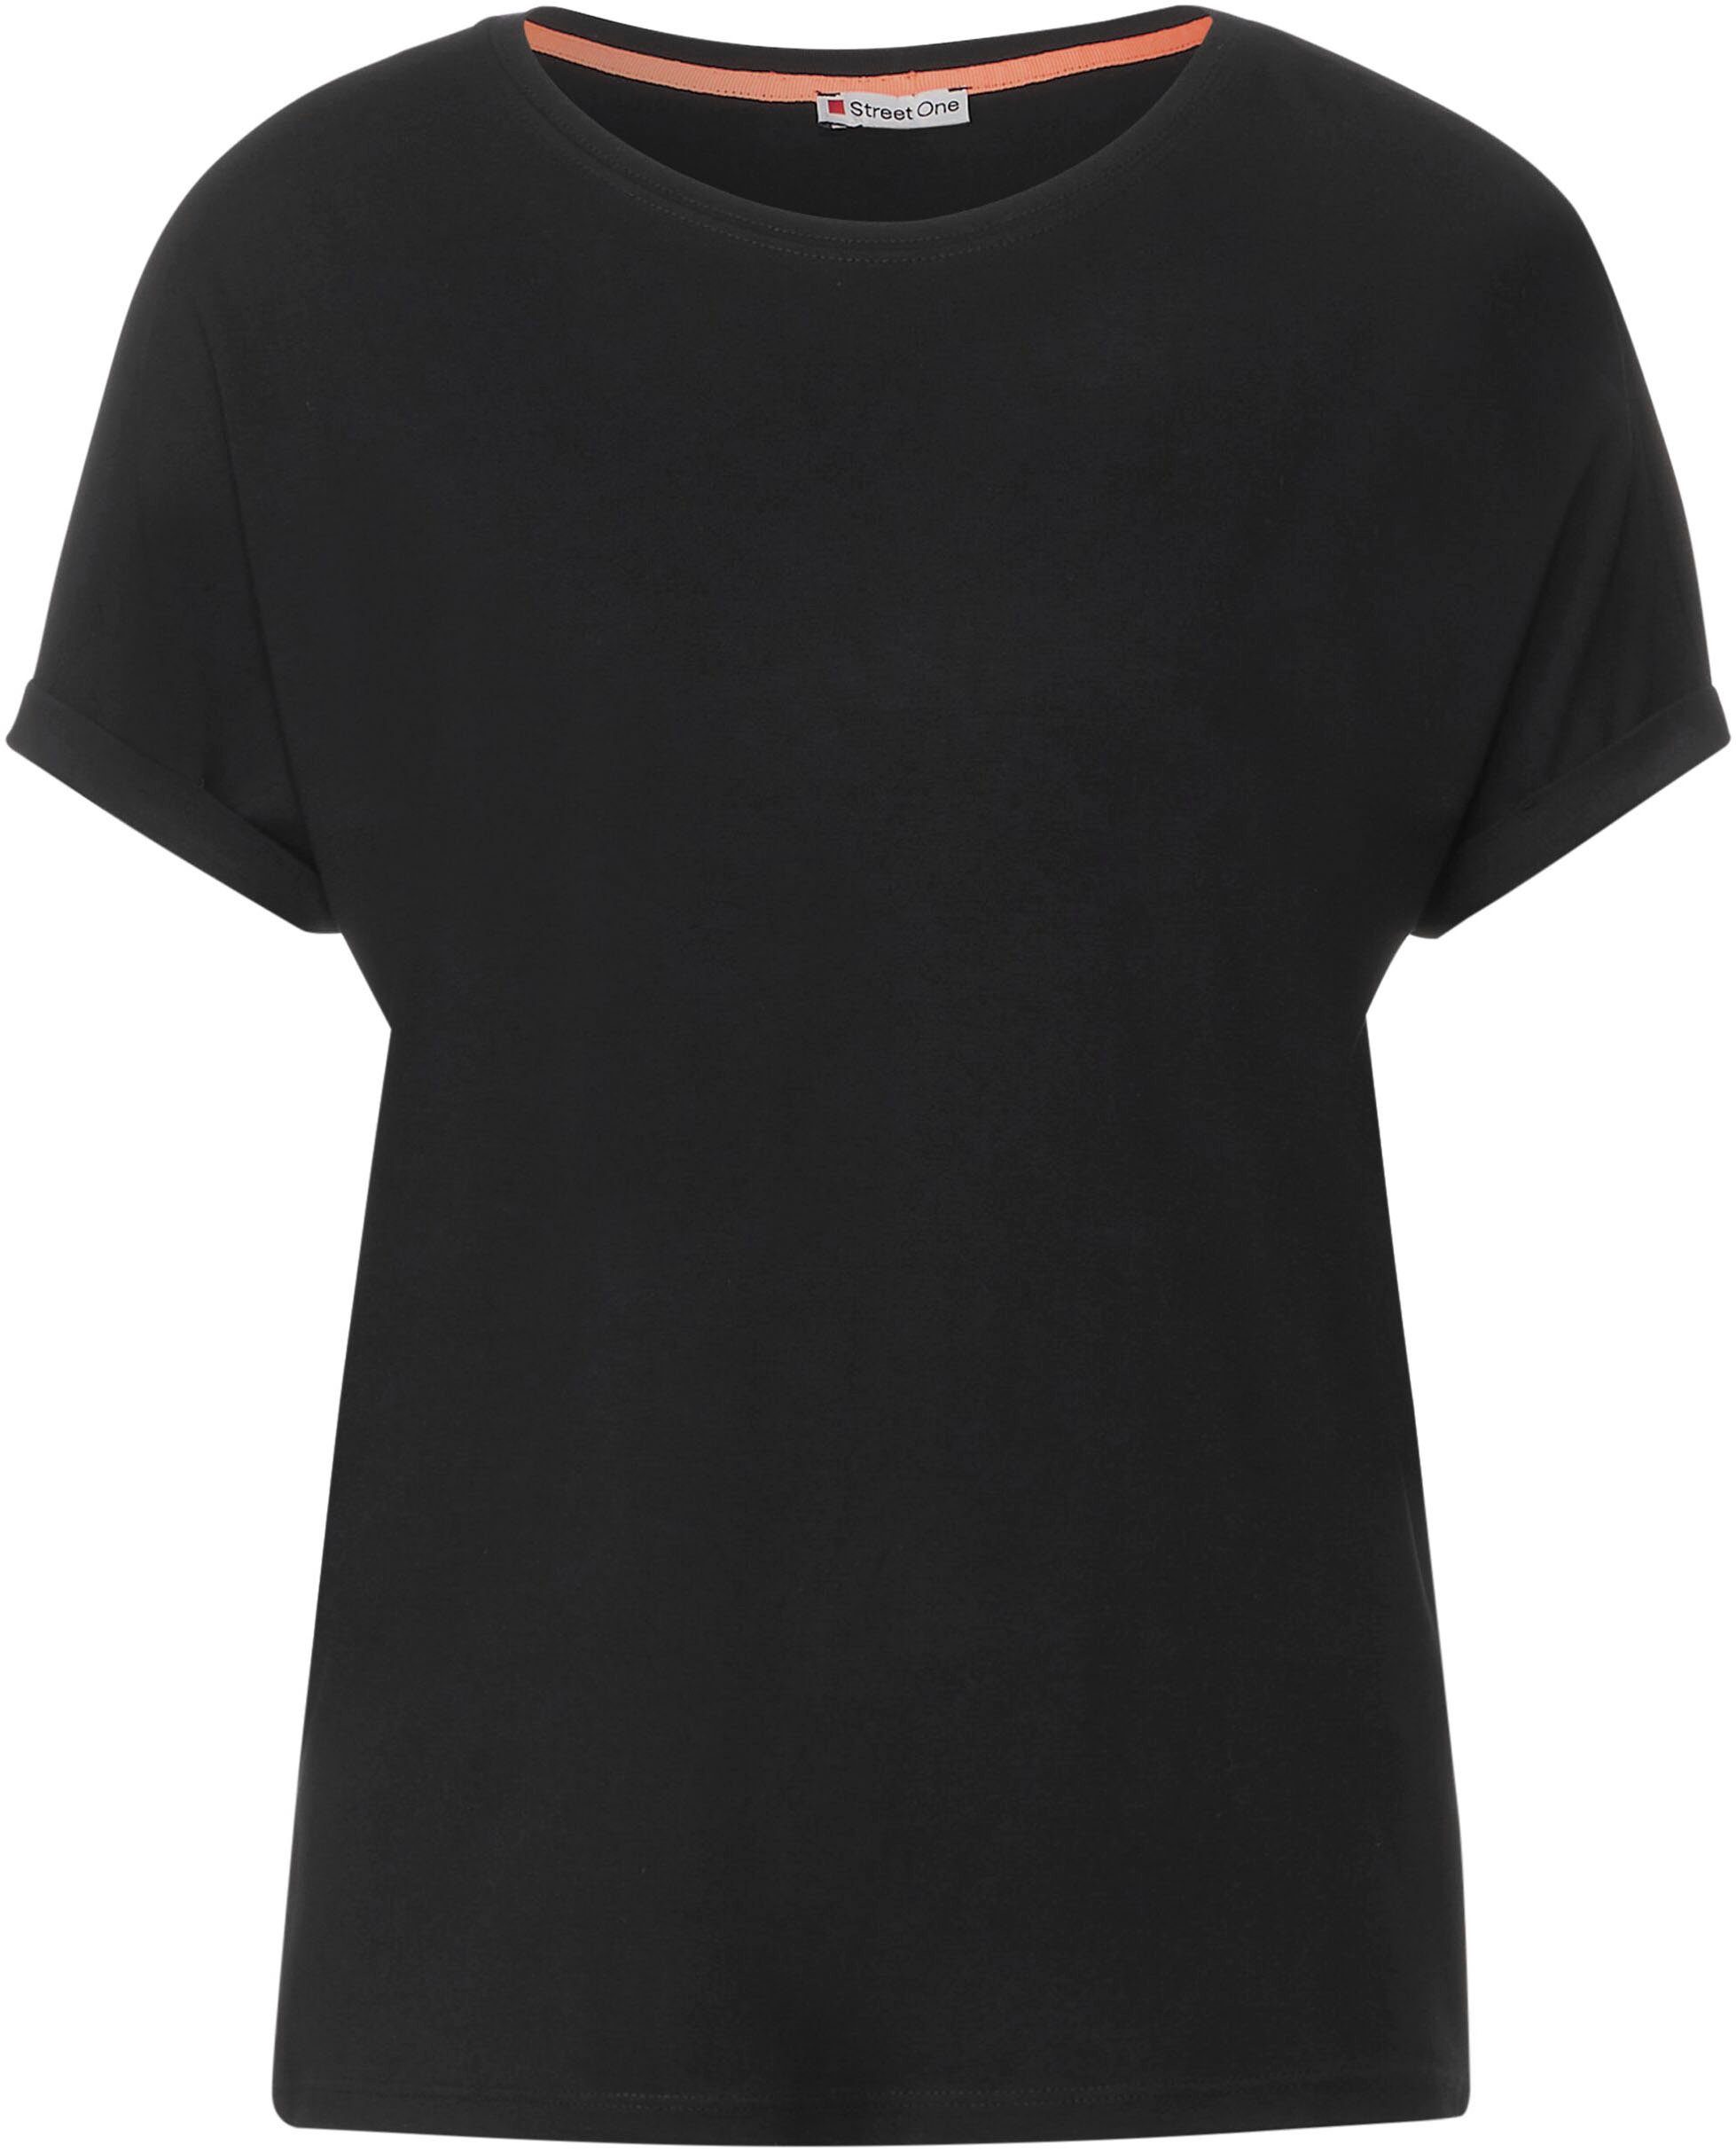 im Style Crista STREET Black ONE T-Shirt